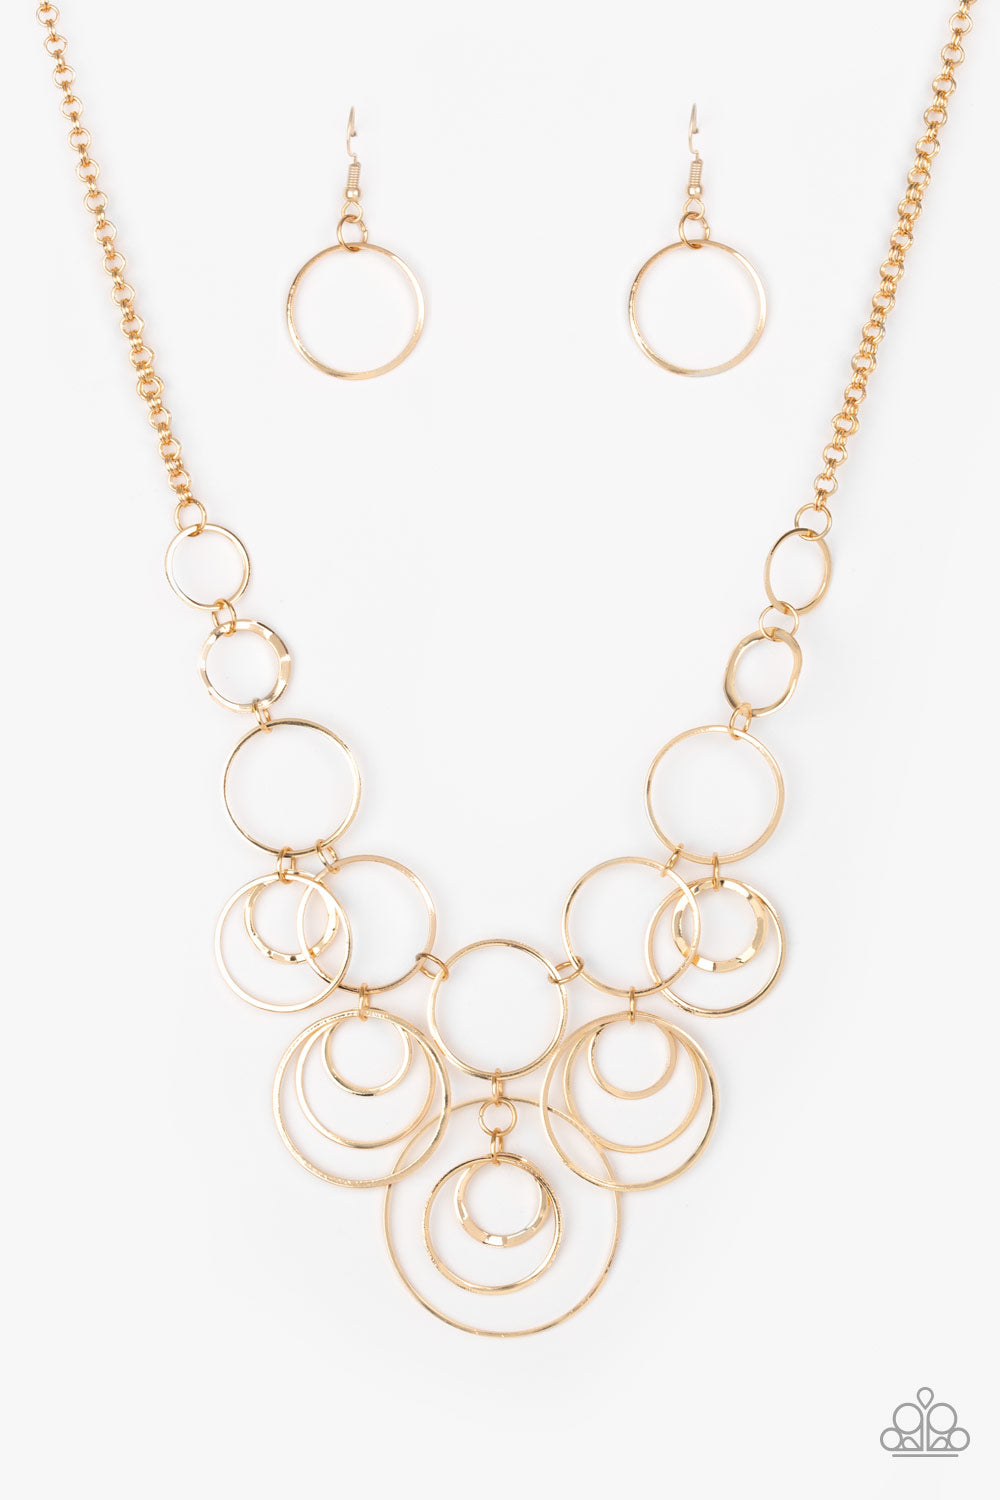 Break The Cycle - Gold Necklace Set - Princess Glam Shop